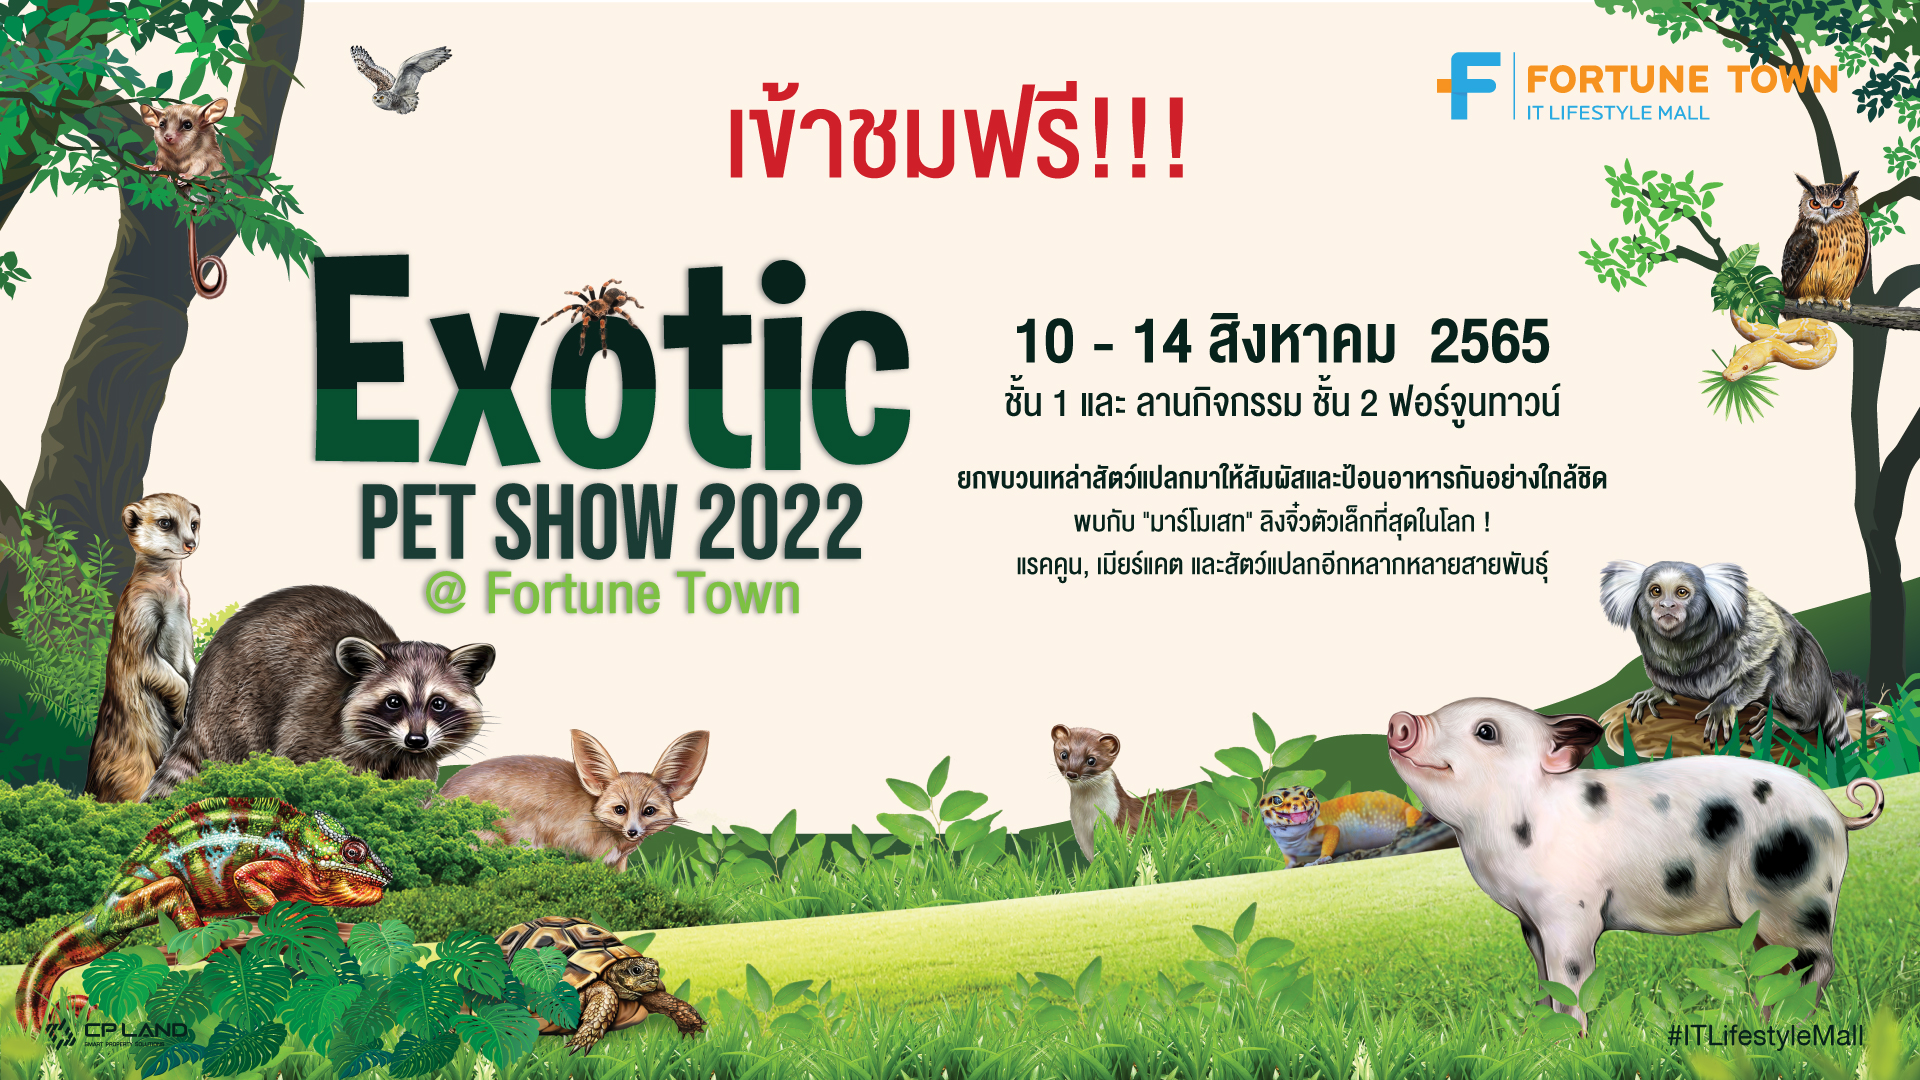 “Exotic Pet Show 2022 1014 สิงหาคม 2565 FM ONE 103.5